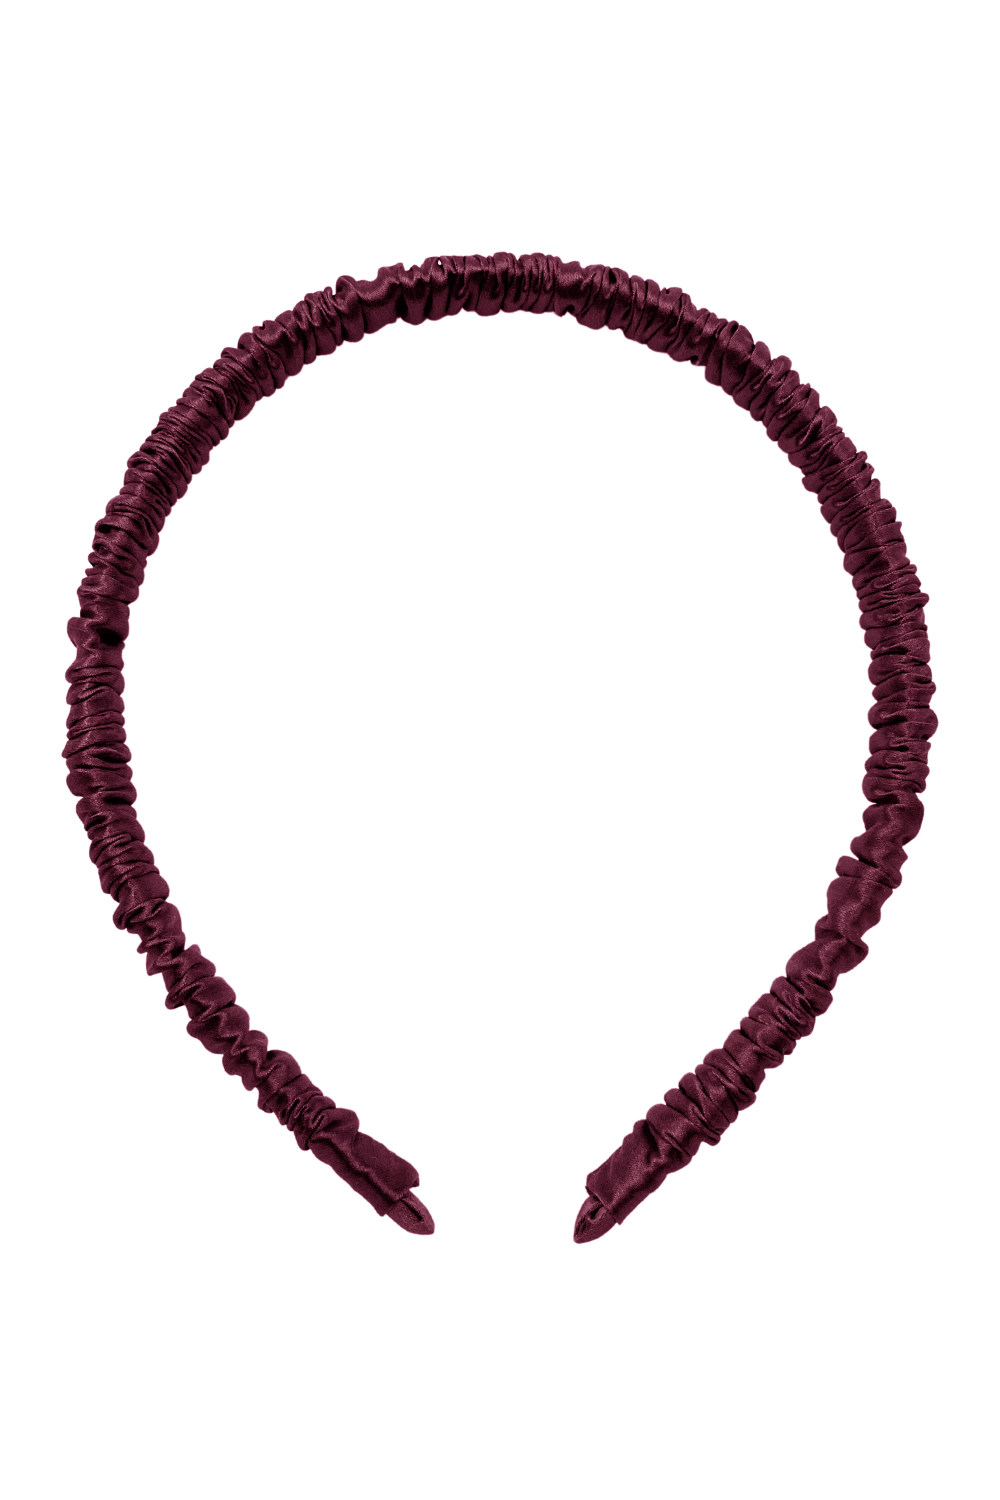 Silk Headband (Thin) - Wine - BASK ™